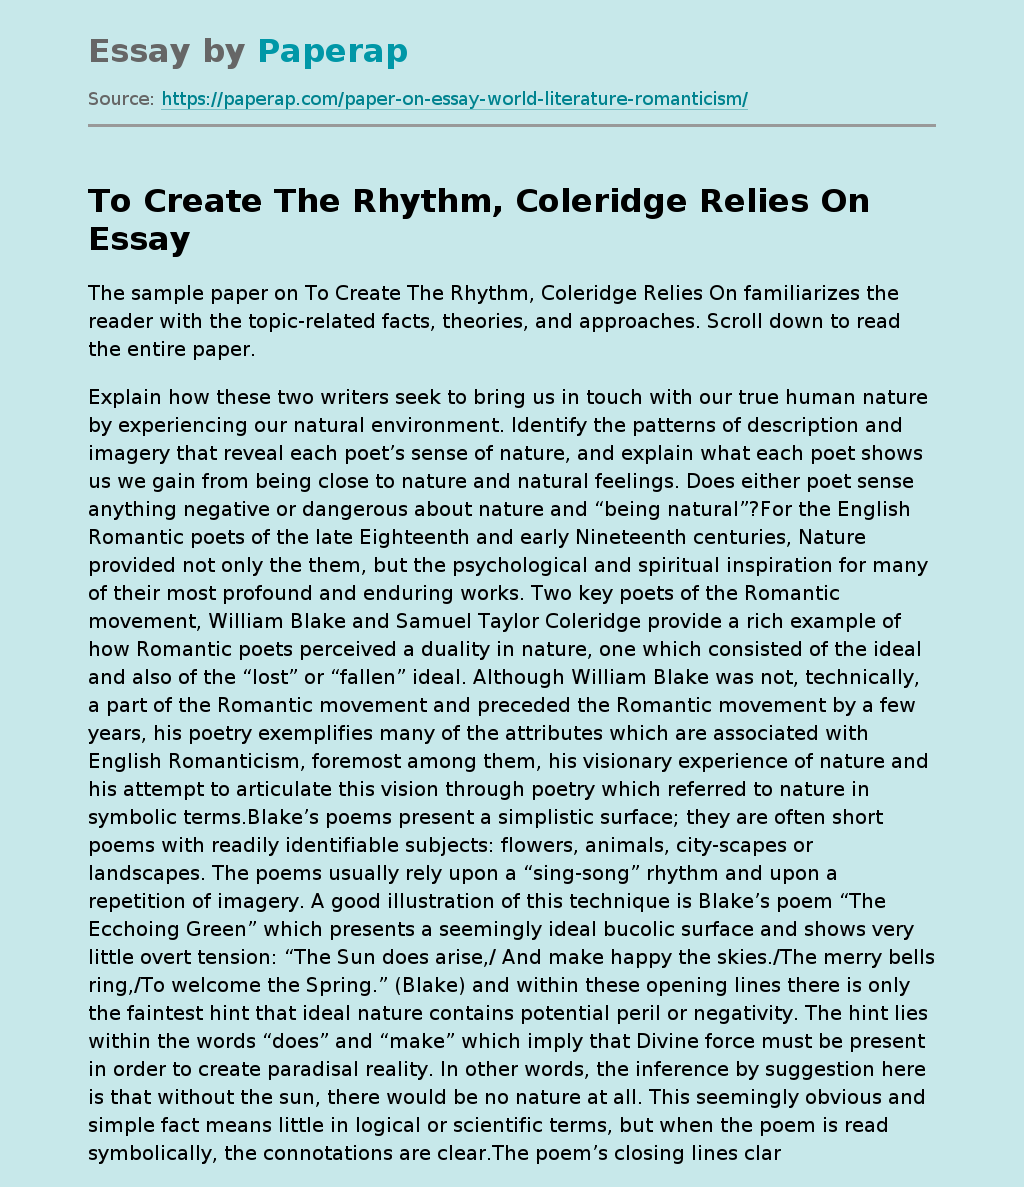 To Create The Rhythm, Coleridge Relies On